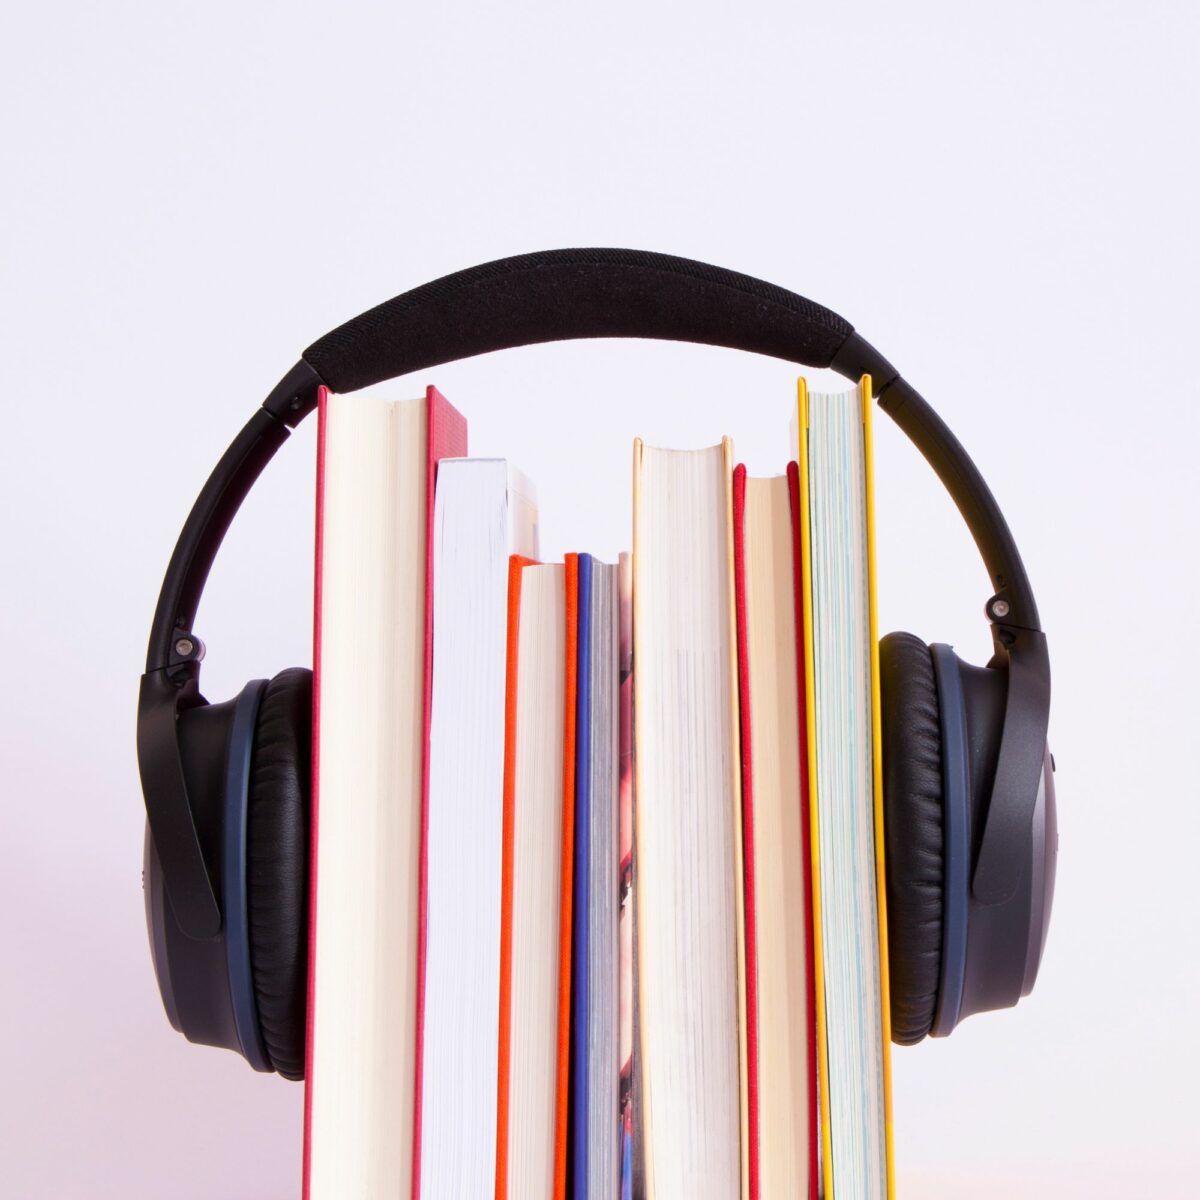 headphones around a set of books